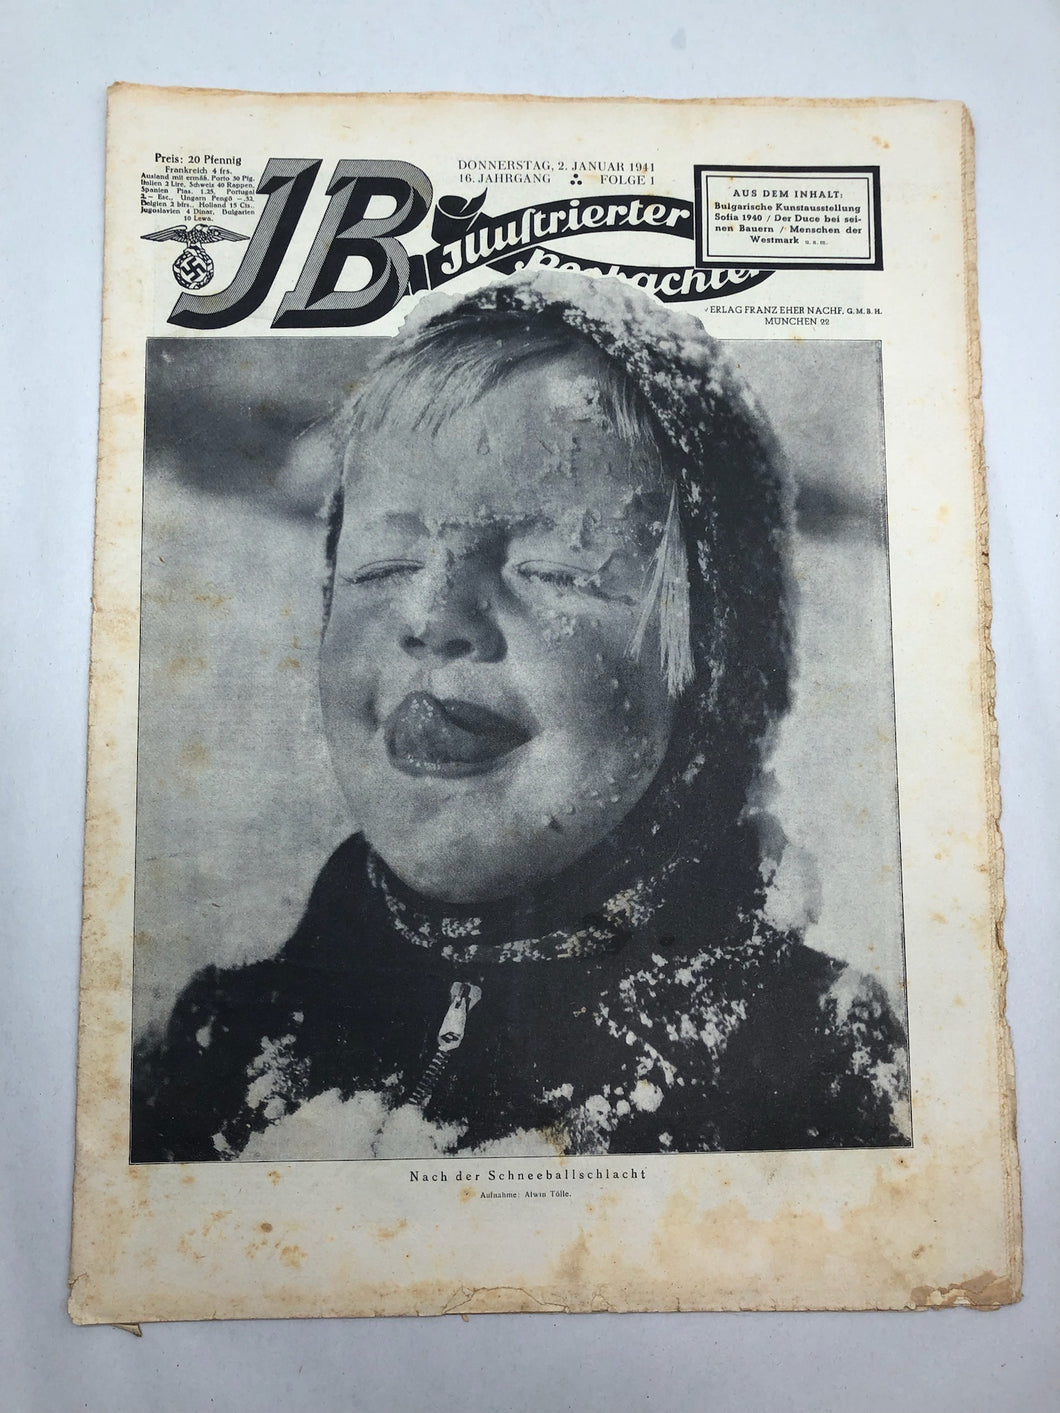 JB Juustrierter Beobachter NSDAP Magazine Original WW2 German - 2 January 1941